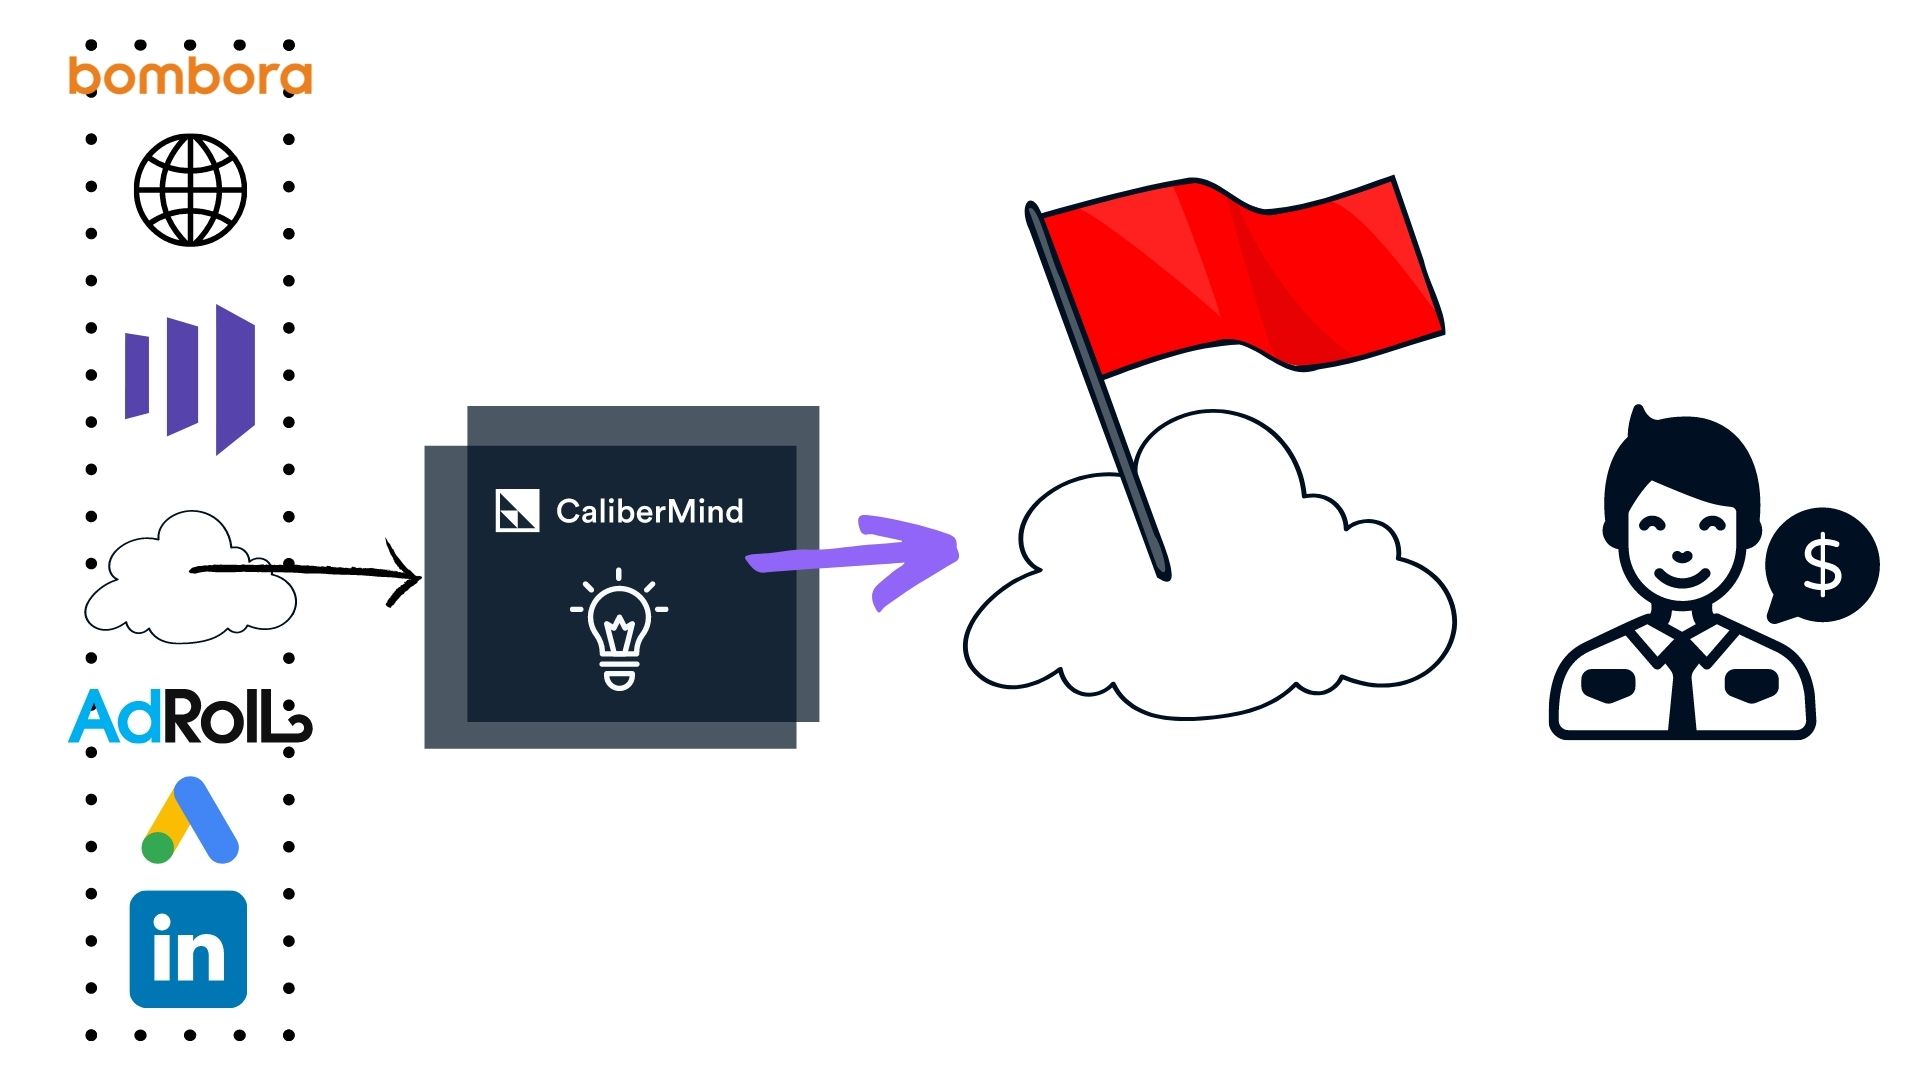 CaliberMind Push engagement feature scores data or abm data into CRM